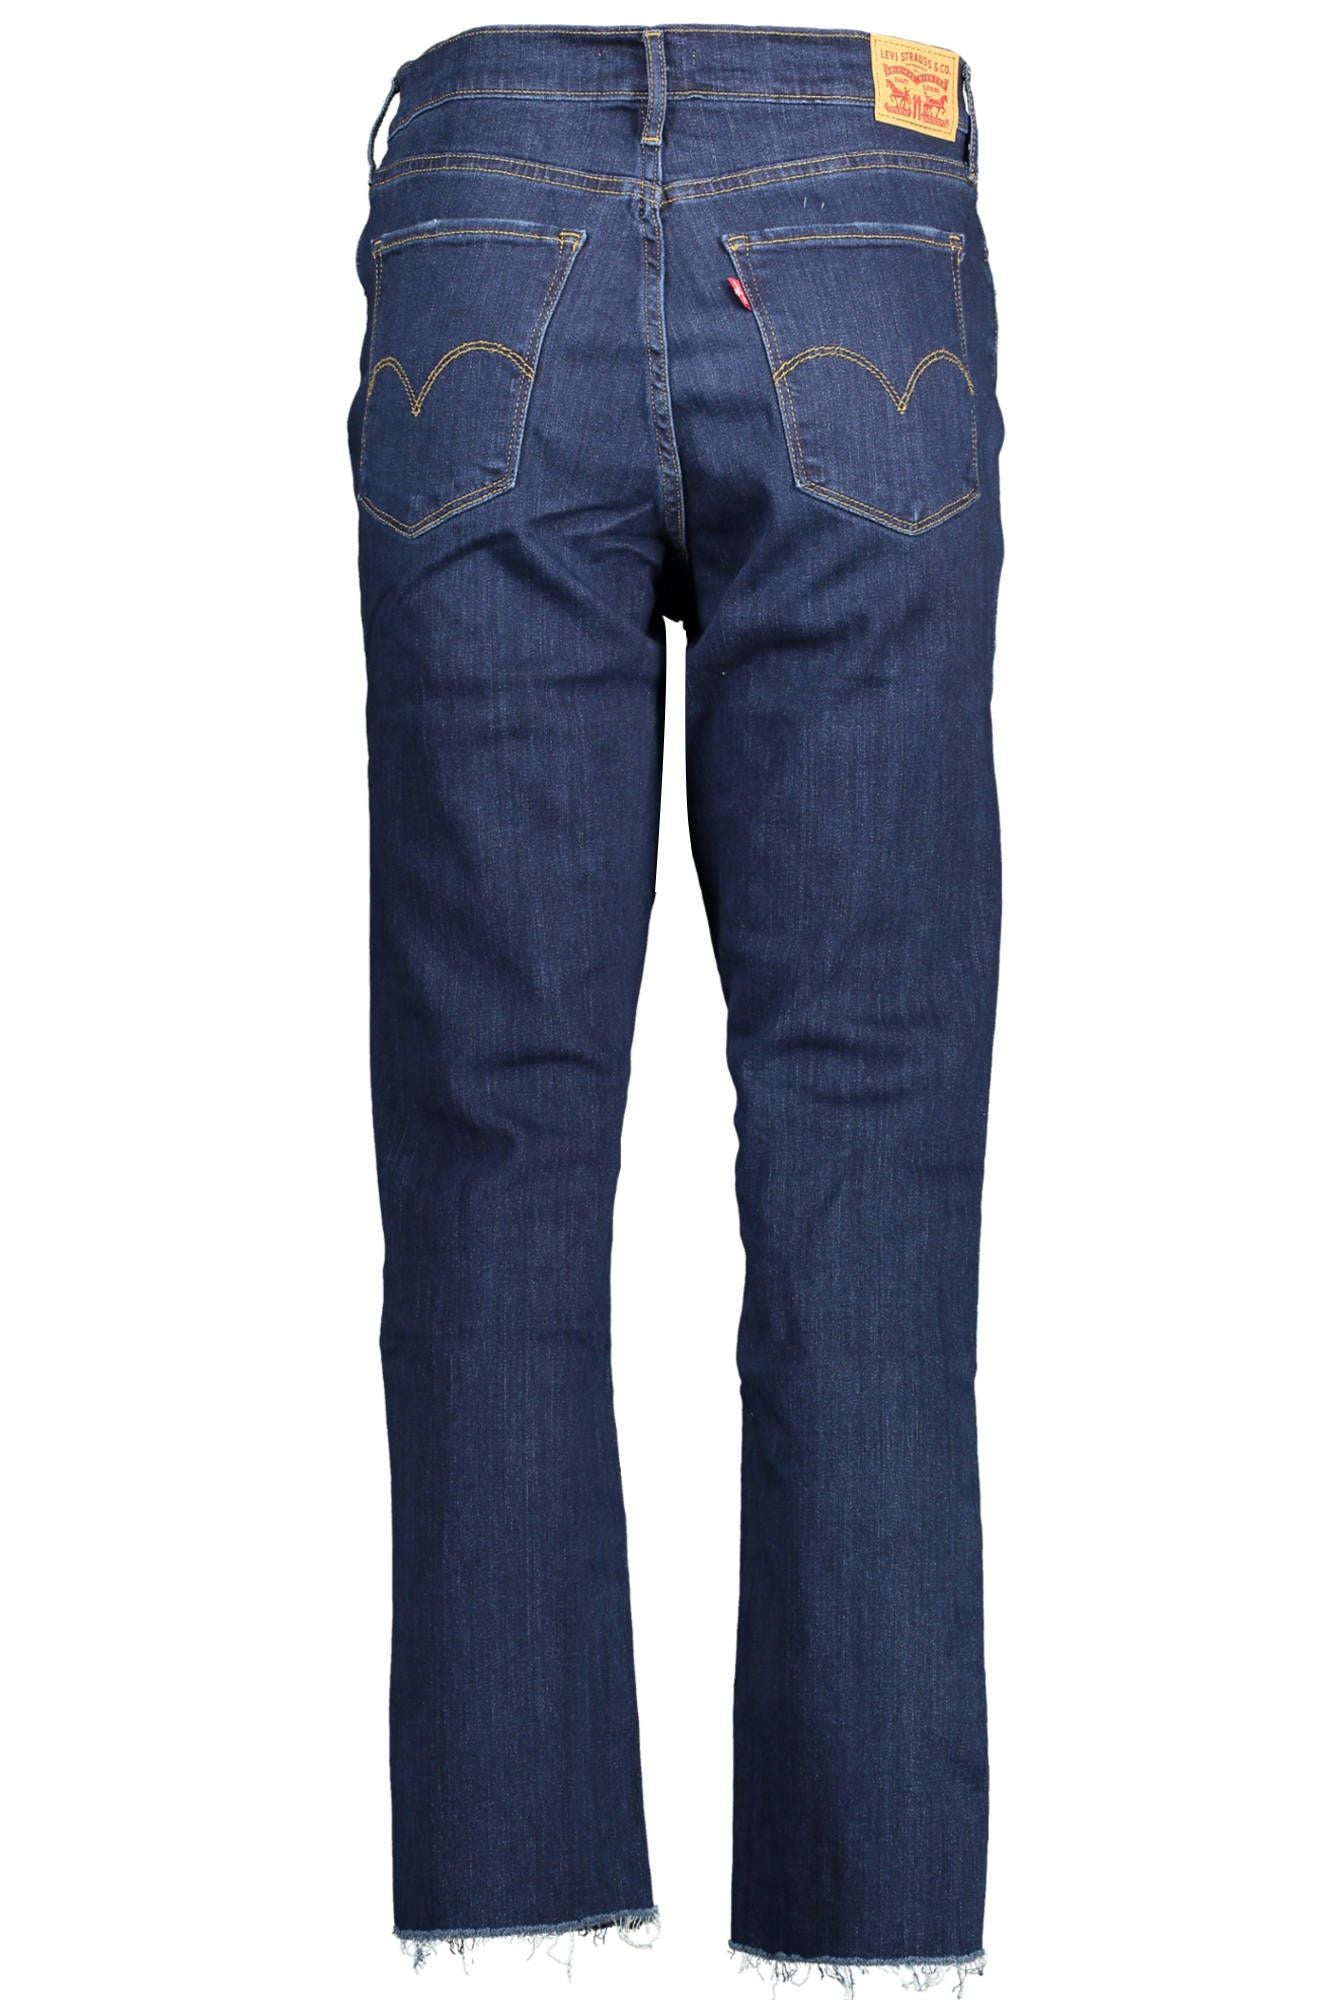 Levi's – Schicke Stretch-Jeans aus blauem Denim